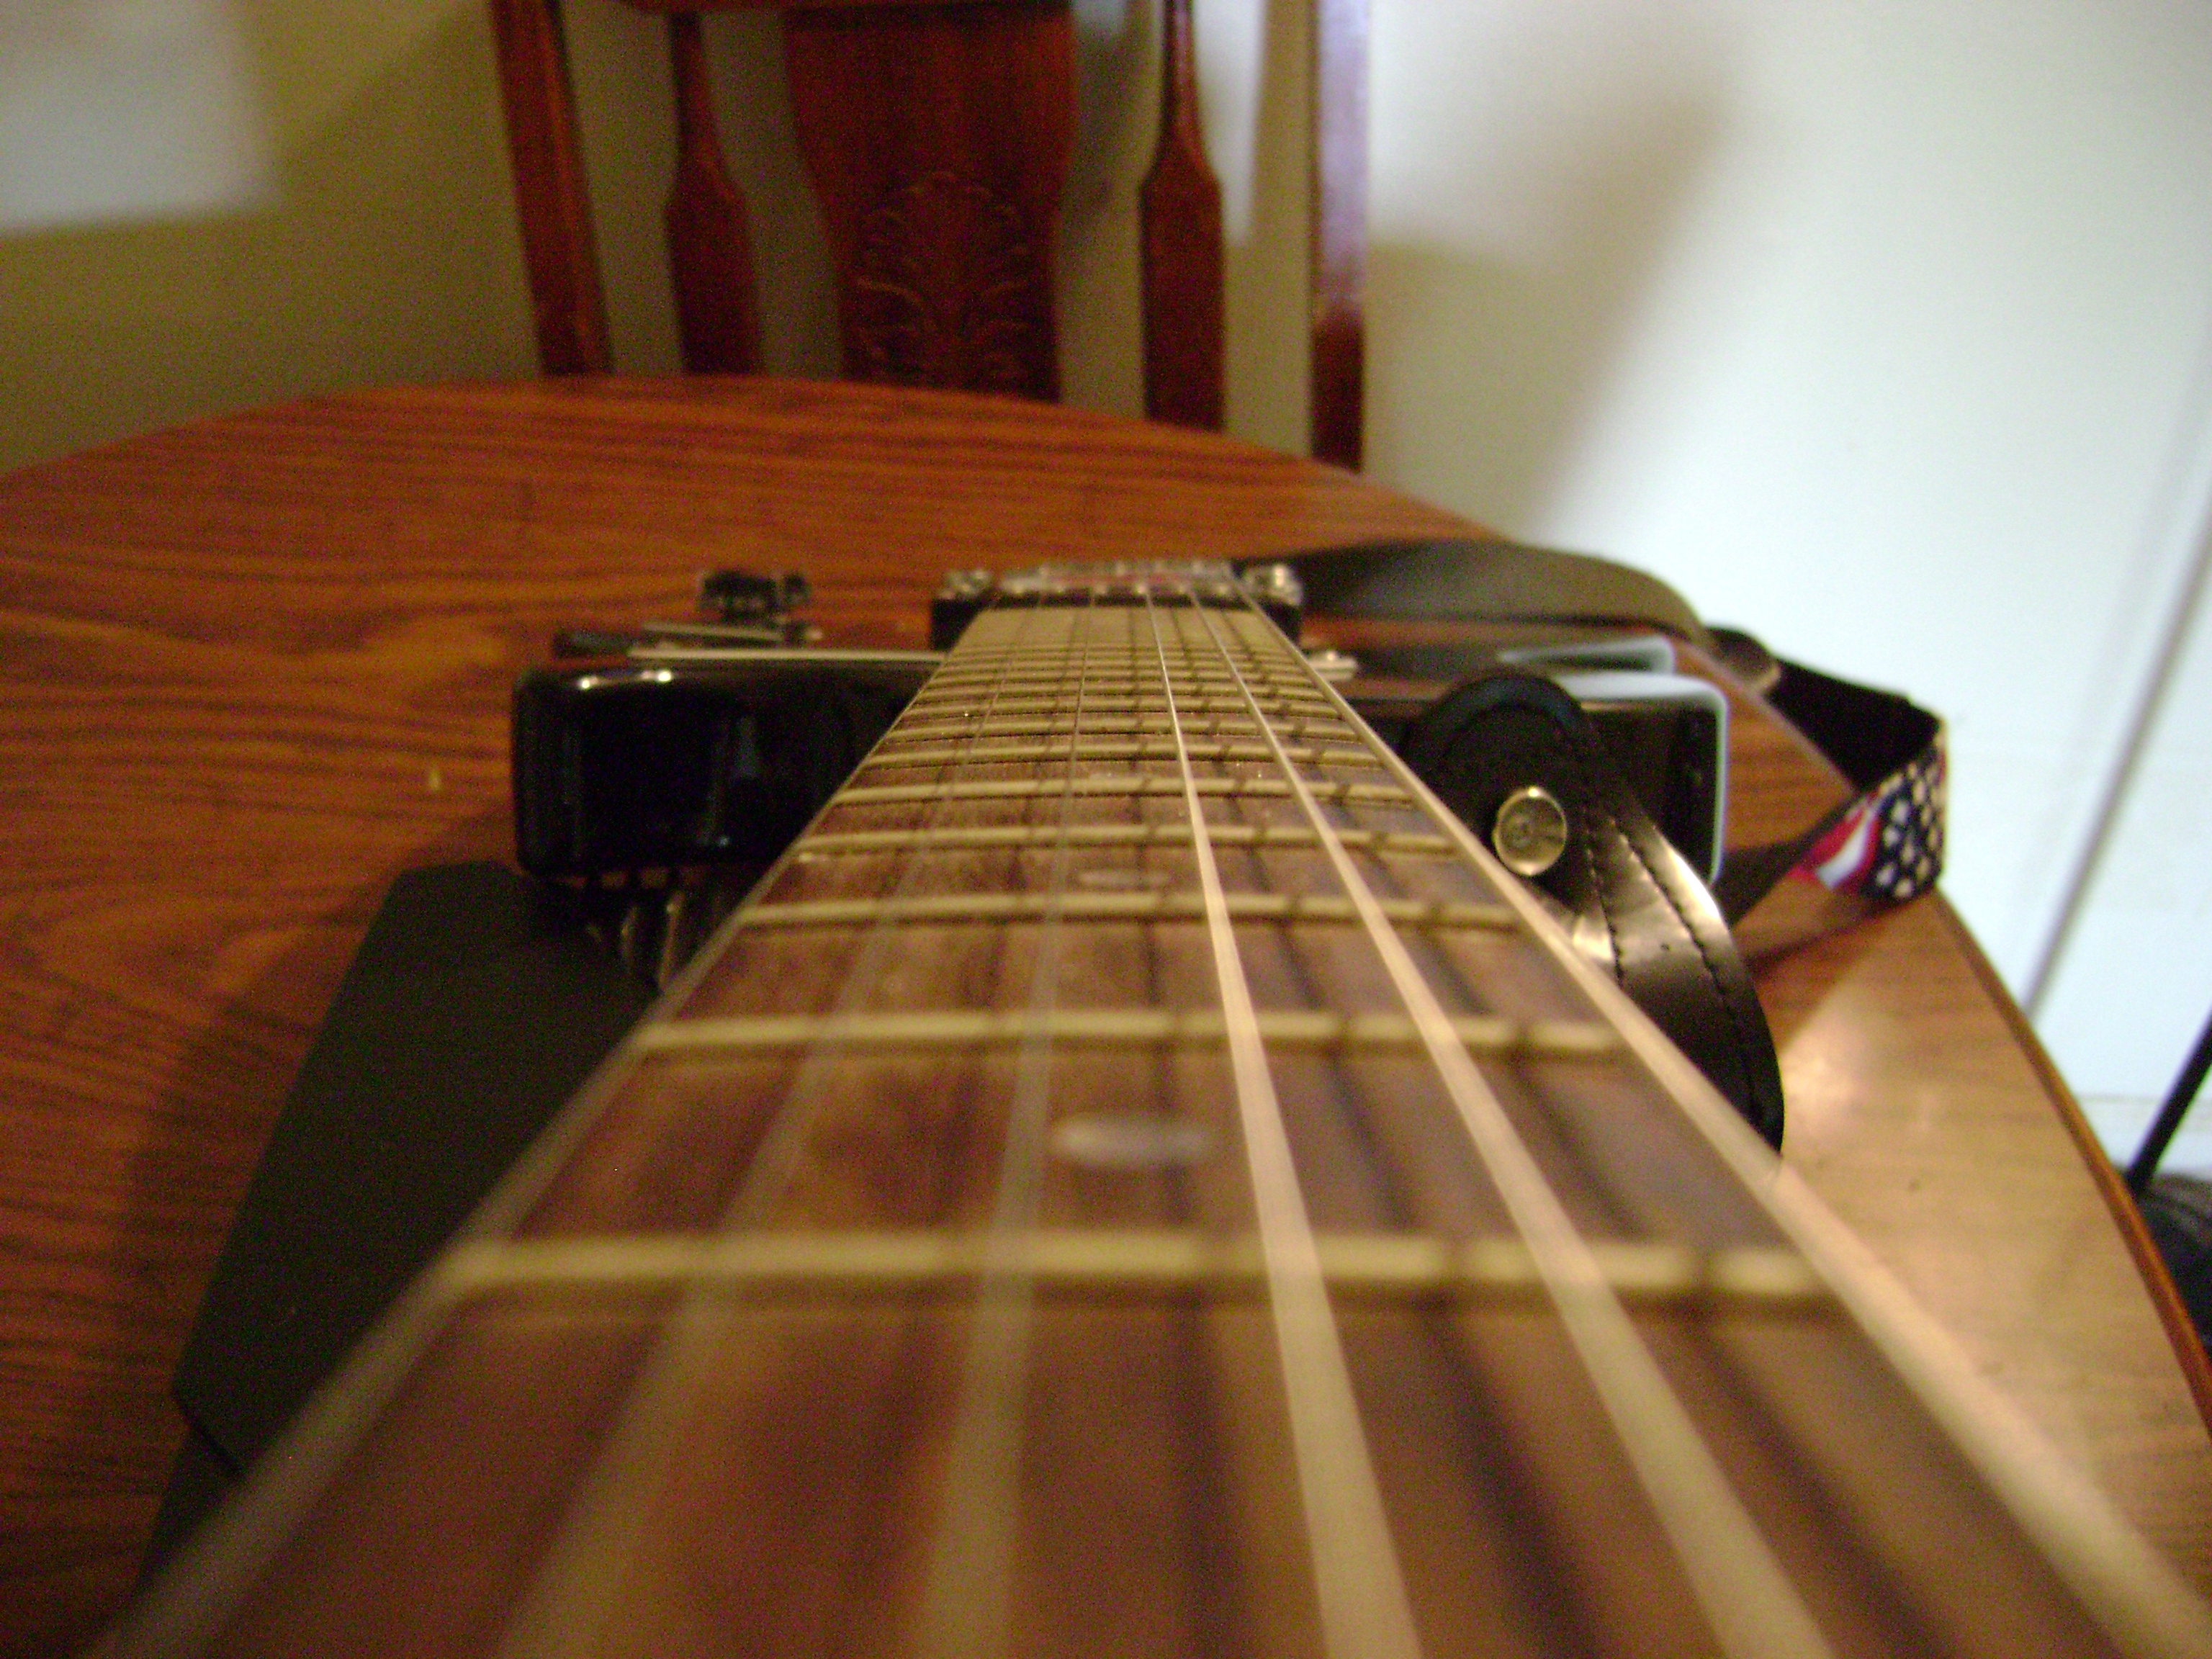 Guitar View, Fretboard, Guitar, Instruments, Music, HQ Photo